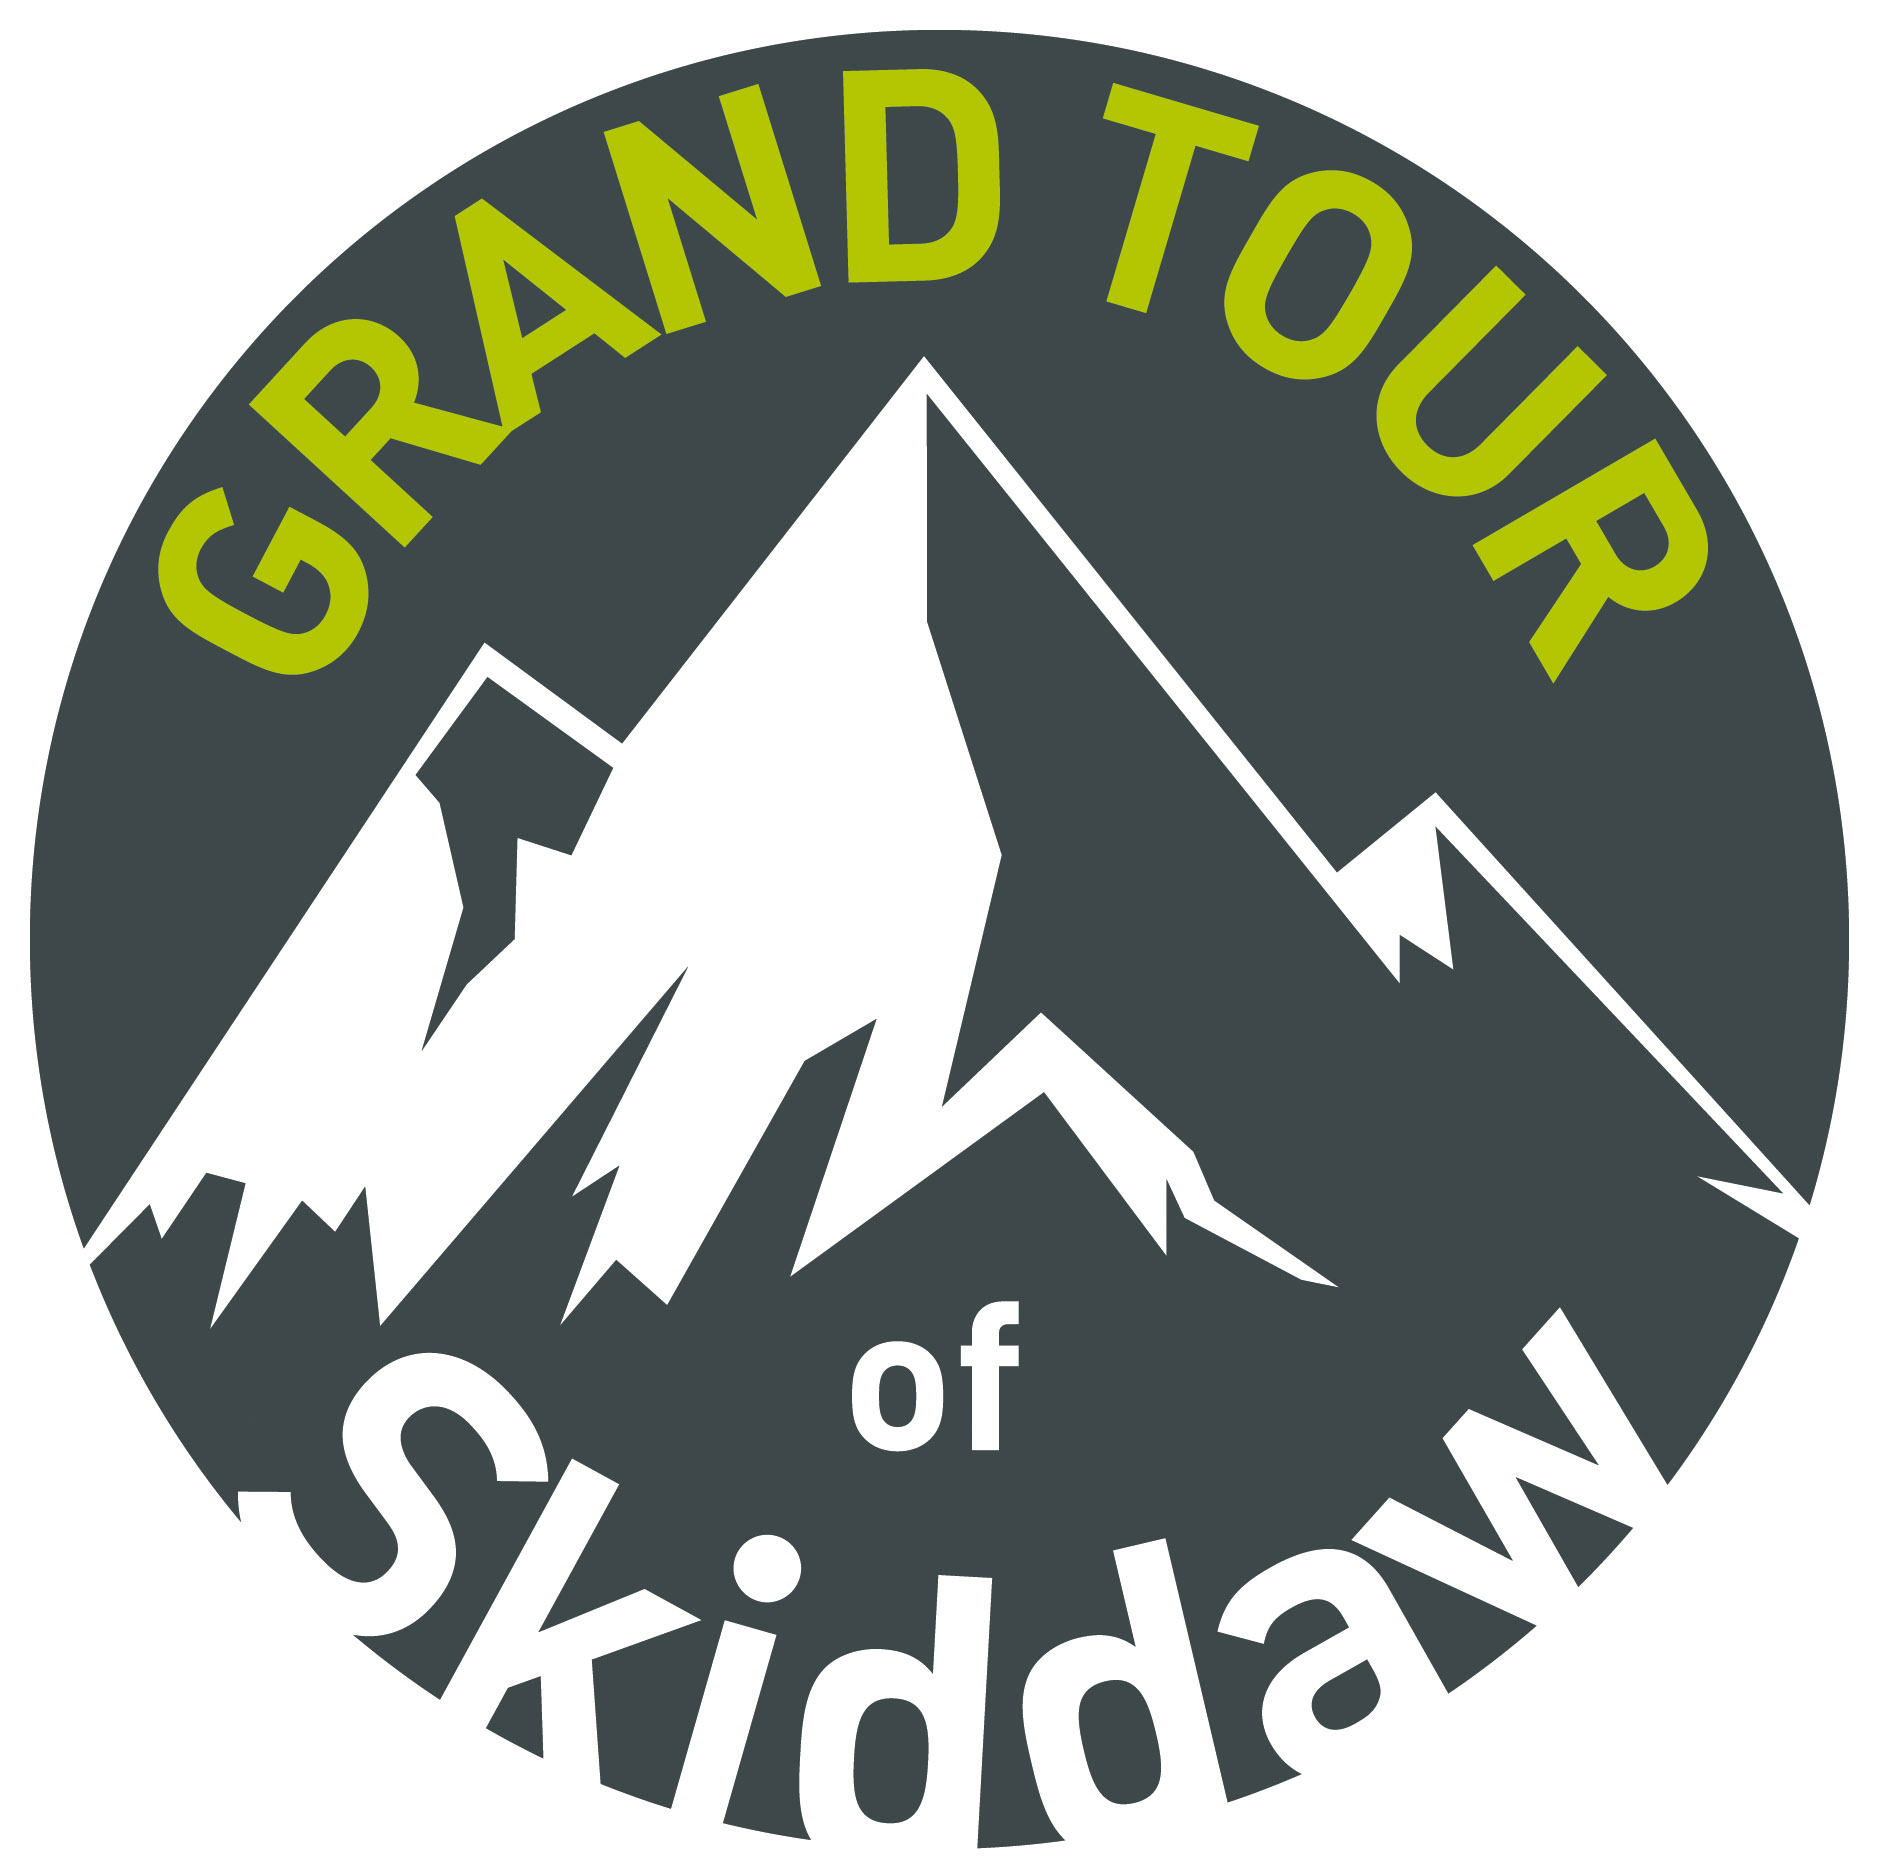 grand tour of skiddaw